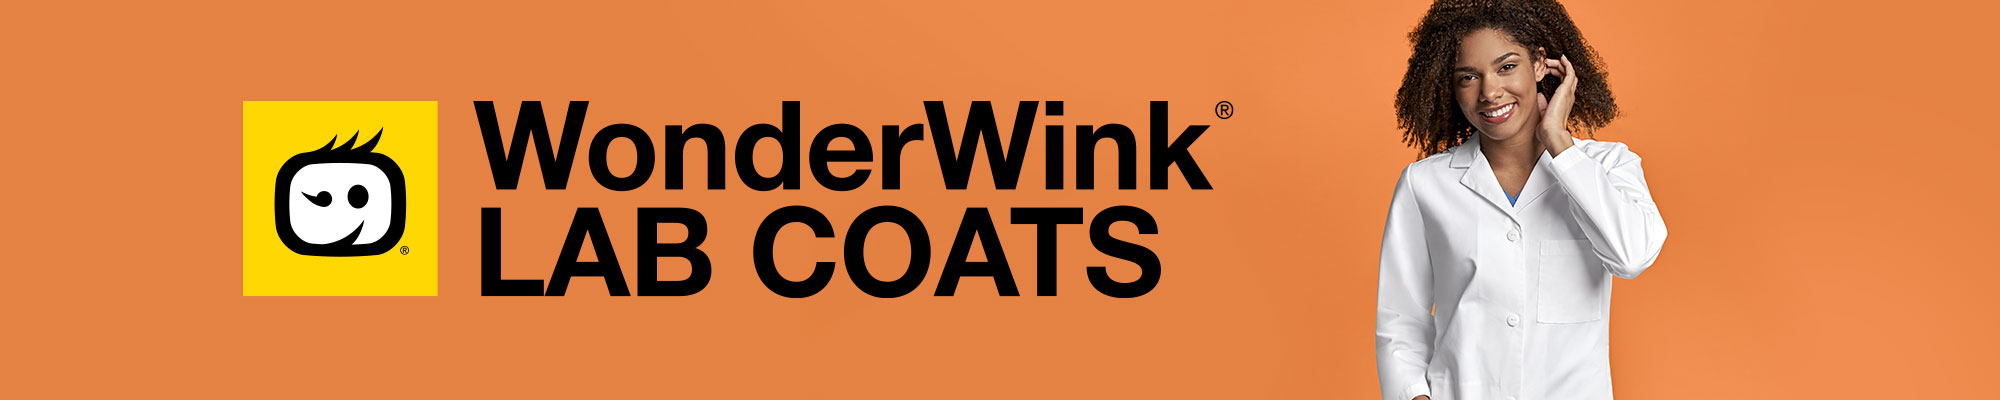 WonderWink Lab Coats